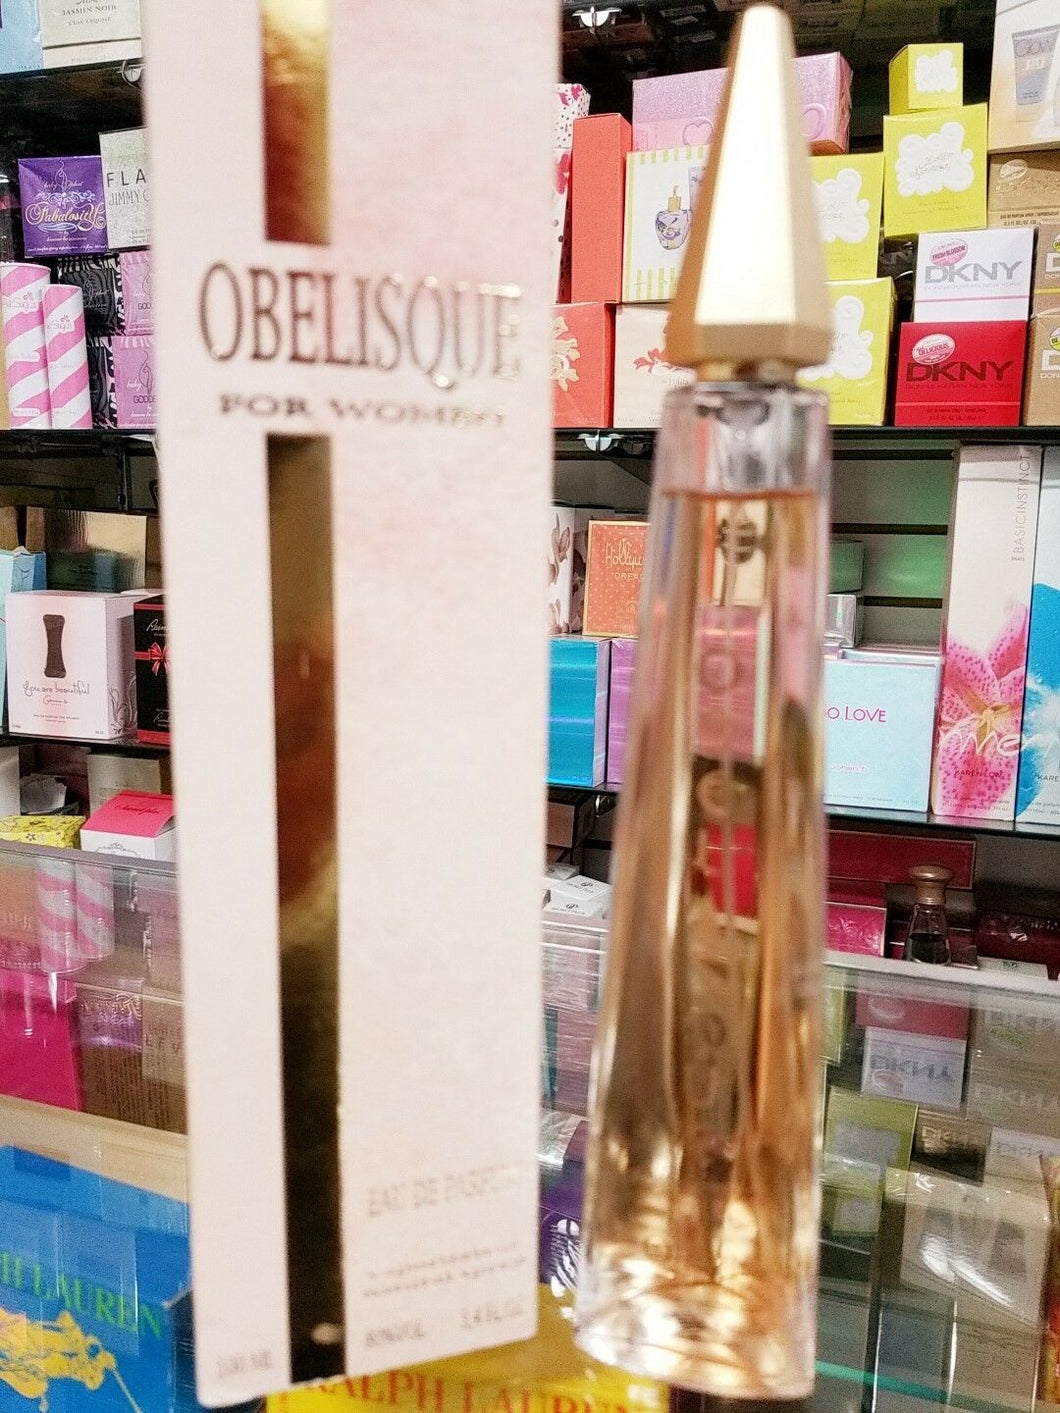 Obelisque for Women by Odeon Parfums Eau De Parfum 3.4 oz 100 ml Spray * IN BOX - Perfume Gallery